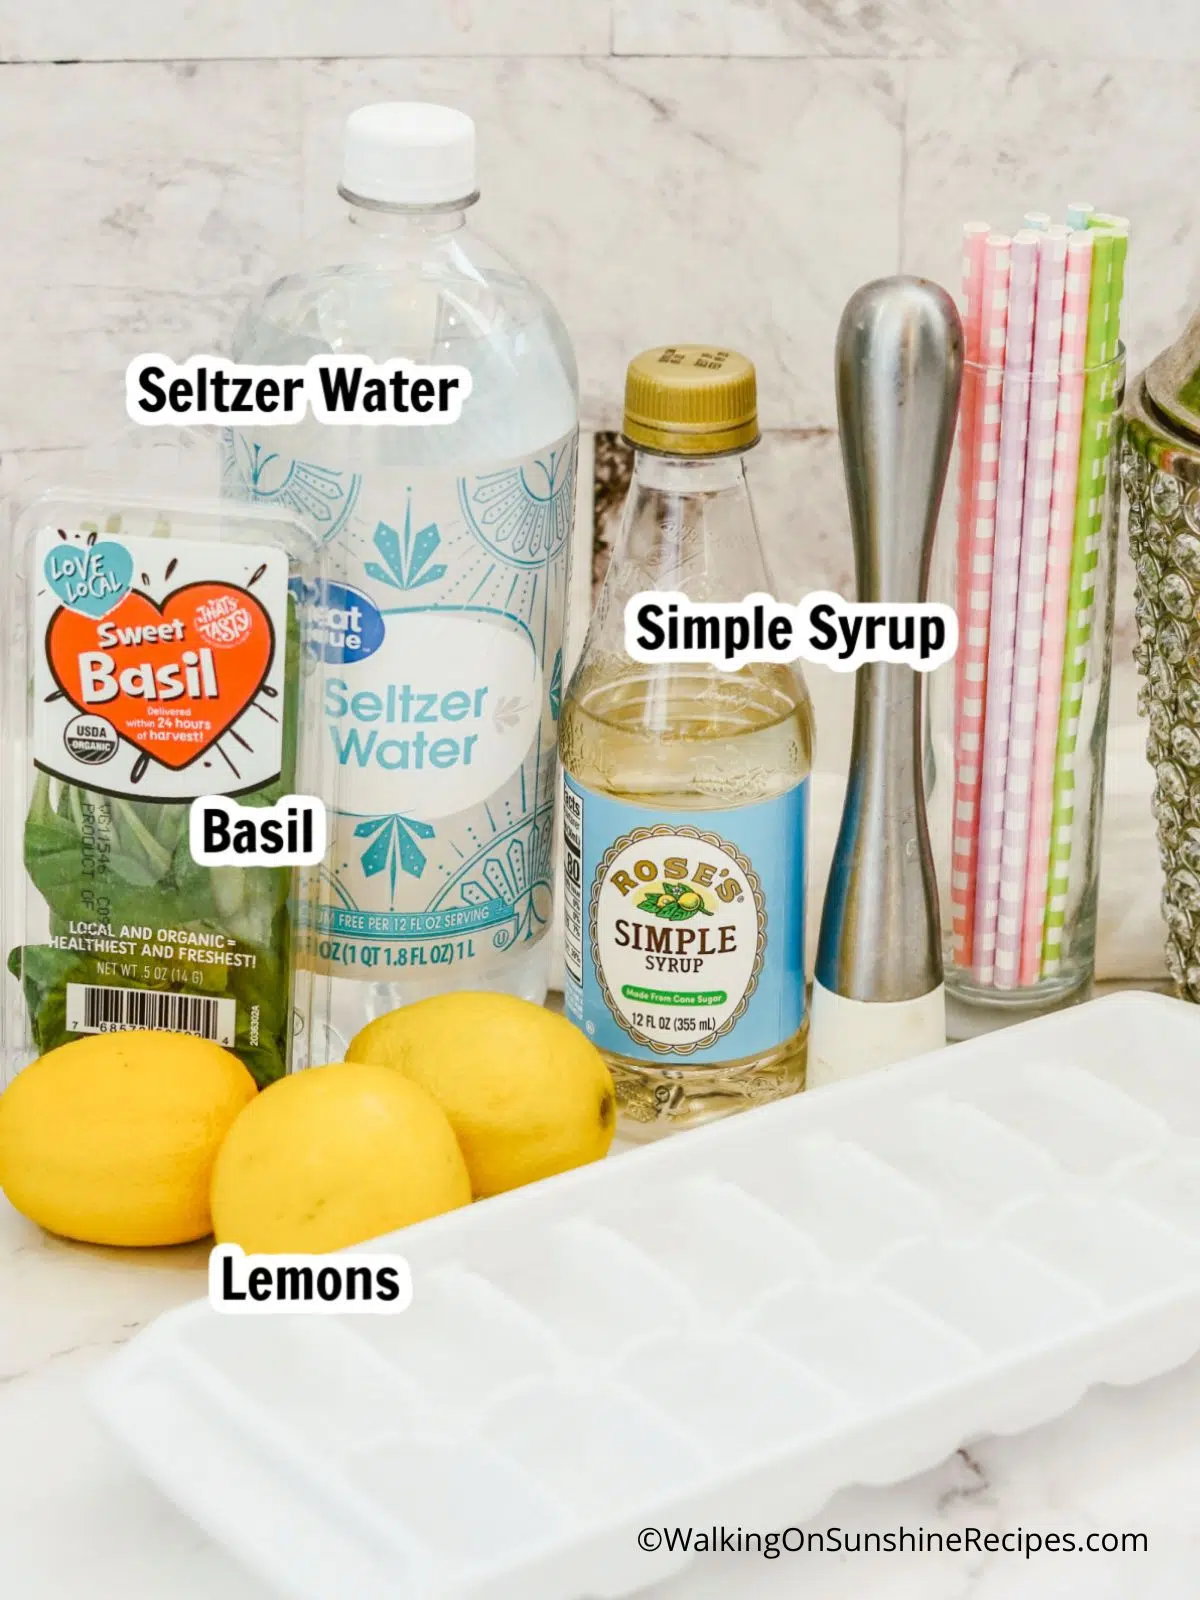 seltzer water, simple syrup, basil, lemons ingredients.